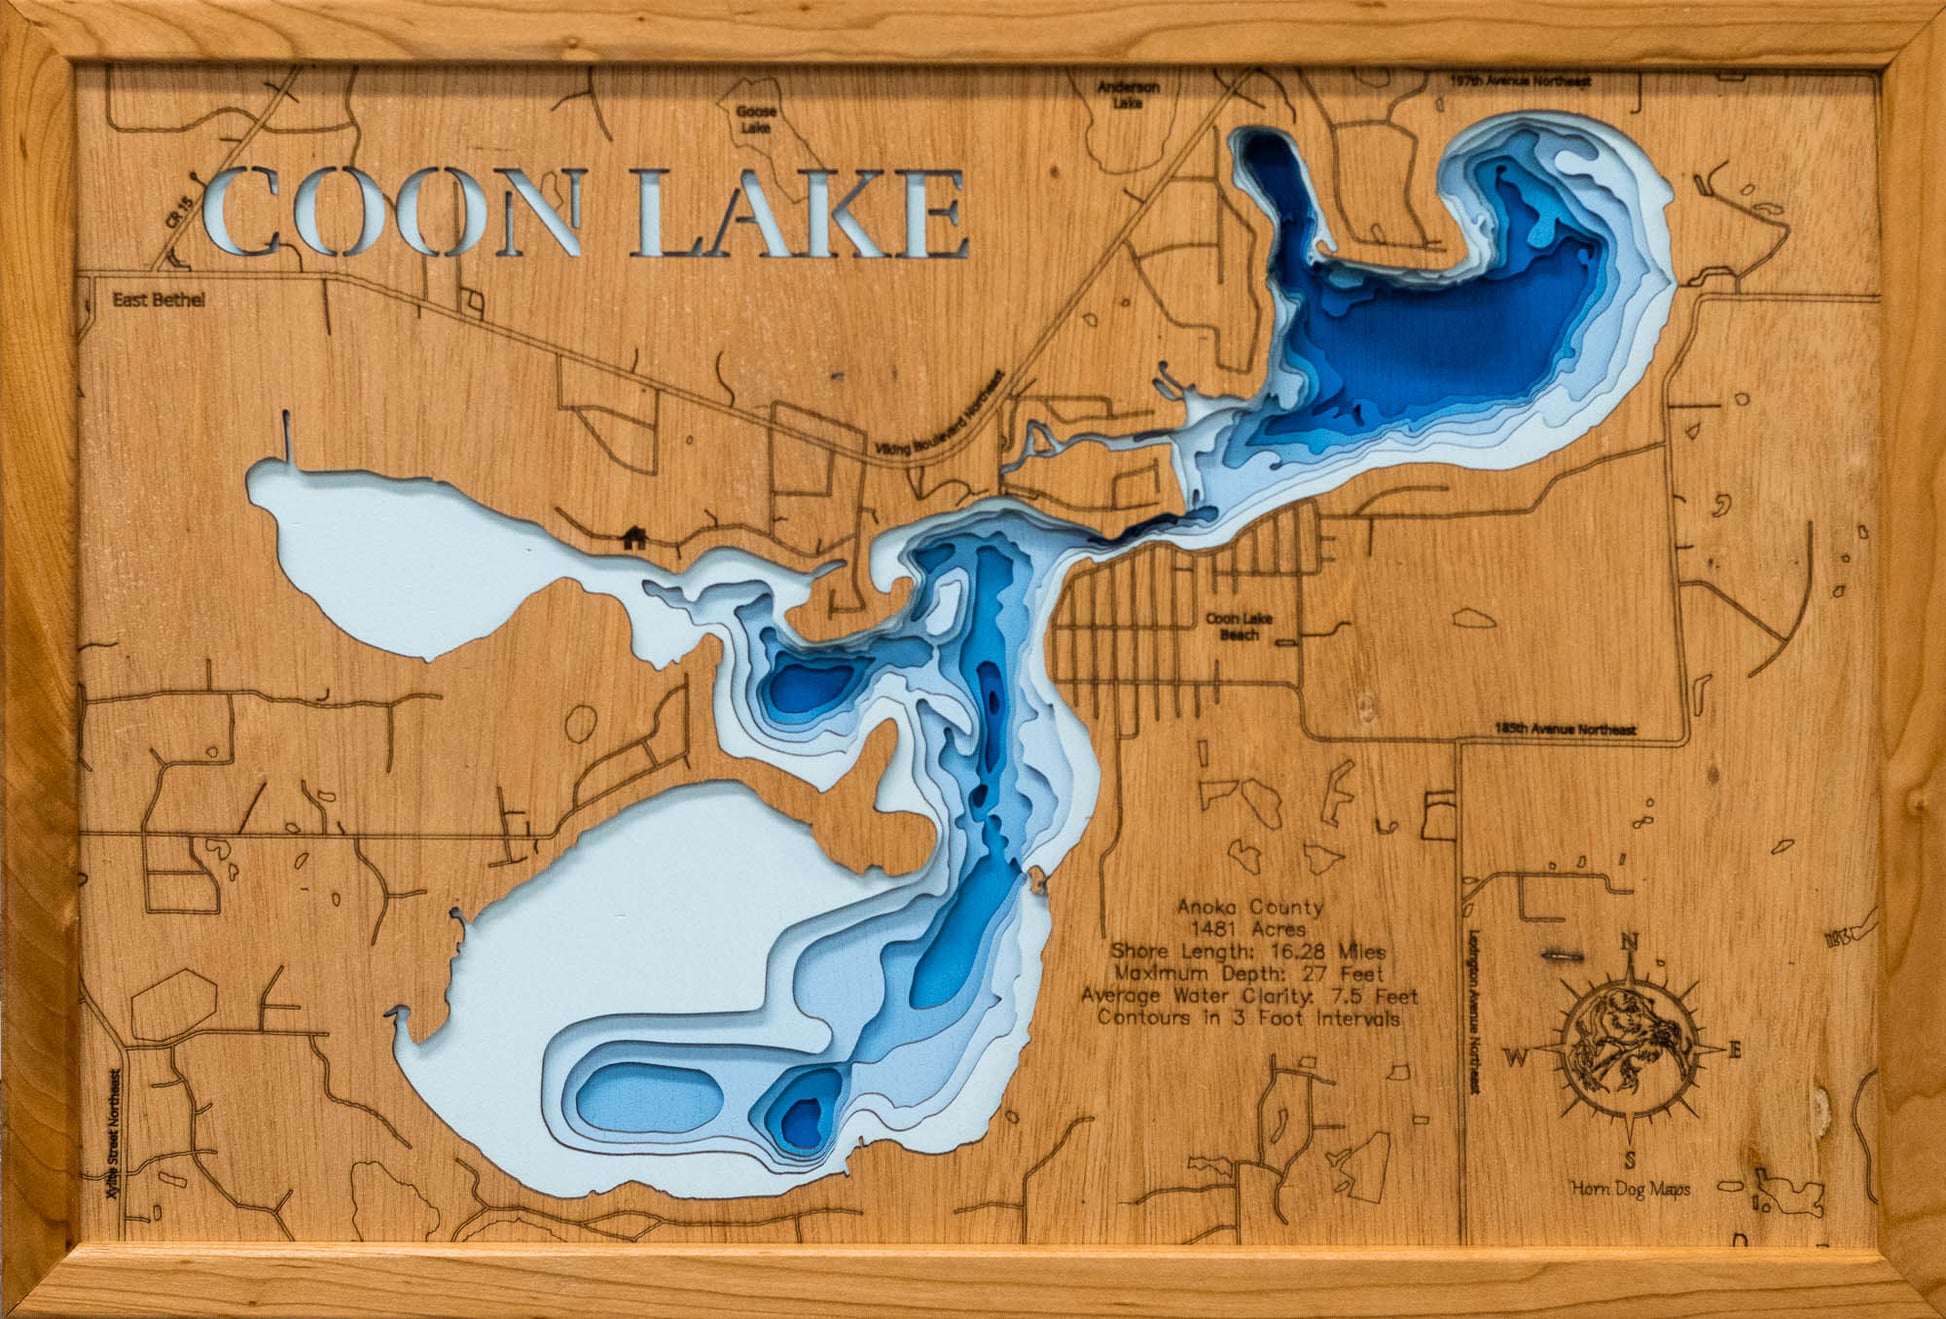 Coon lake in Anoka County, MN